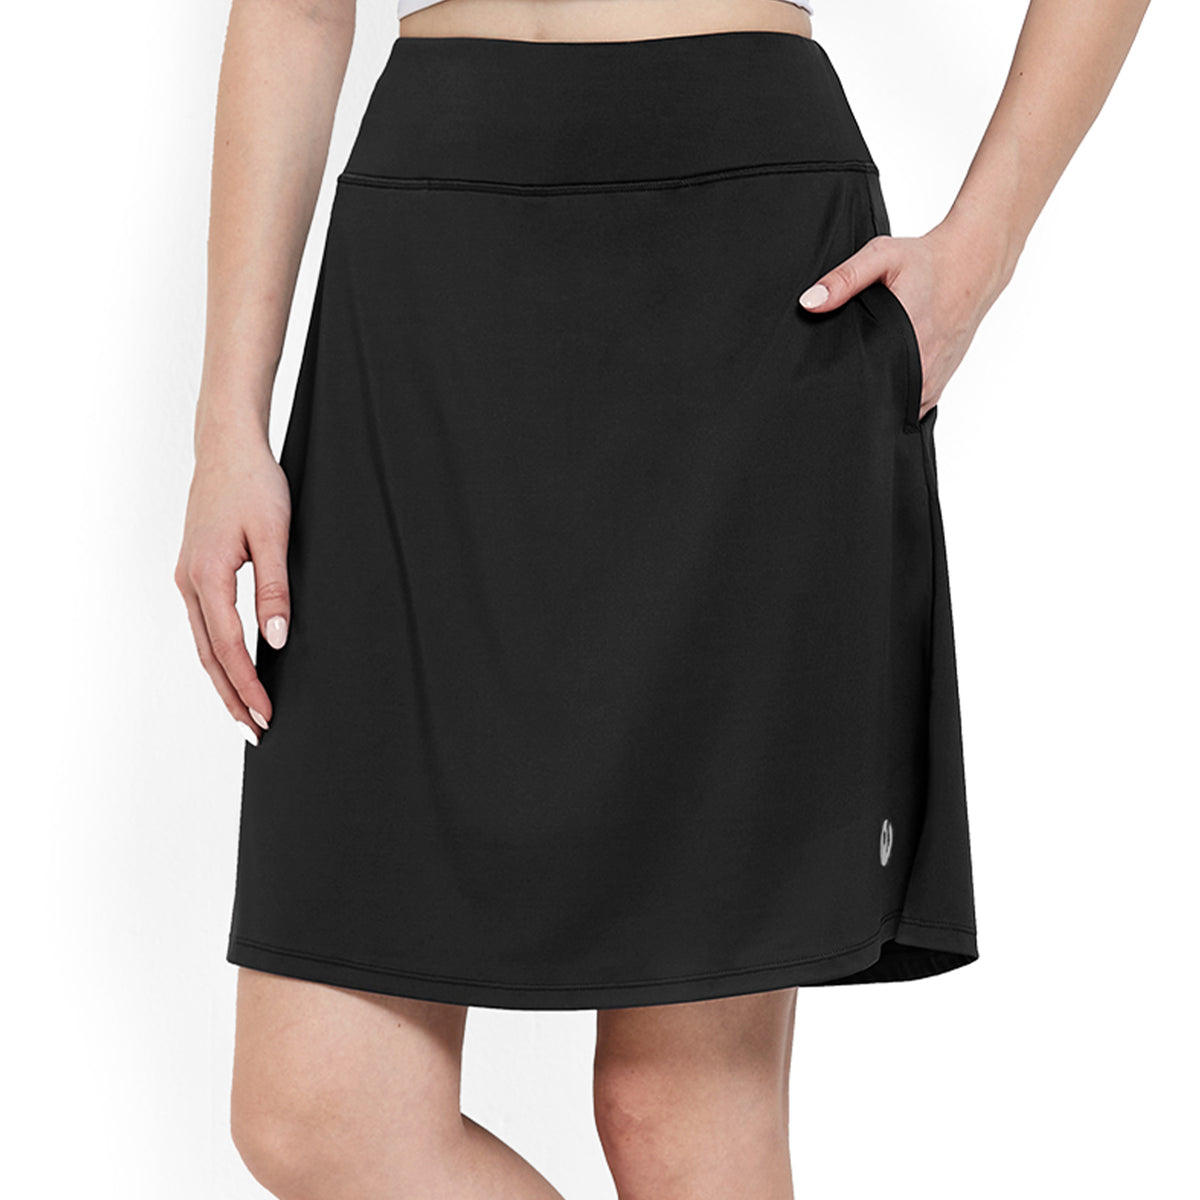 MOTEEPI Skorts Skirts for Women Casual Dressy Cotton Knee Length Golf